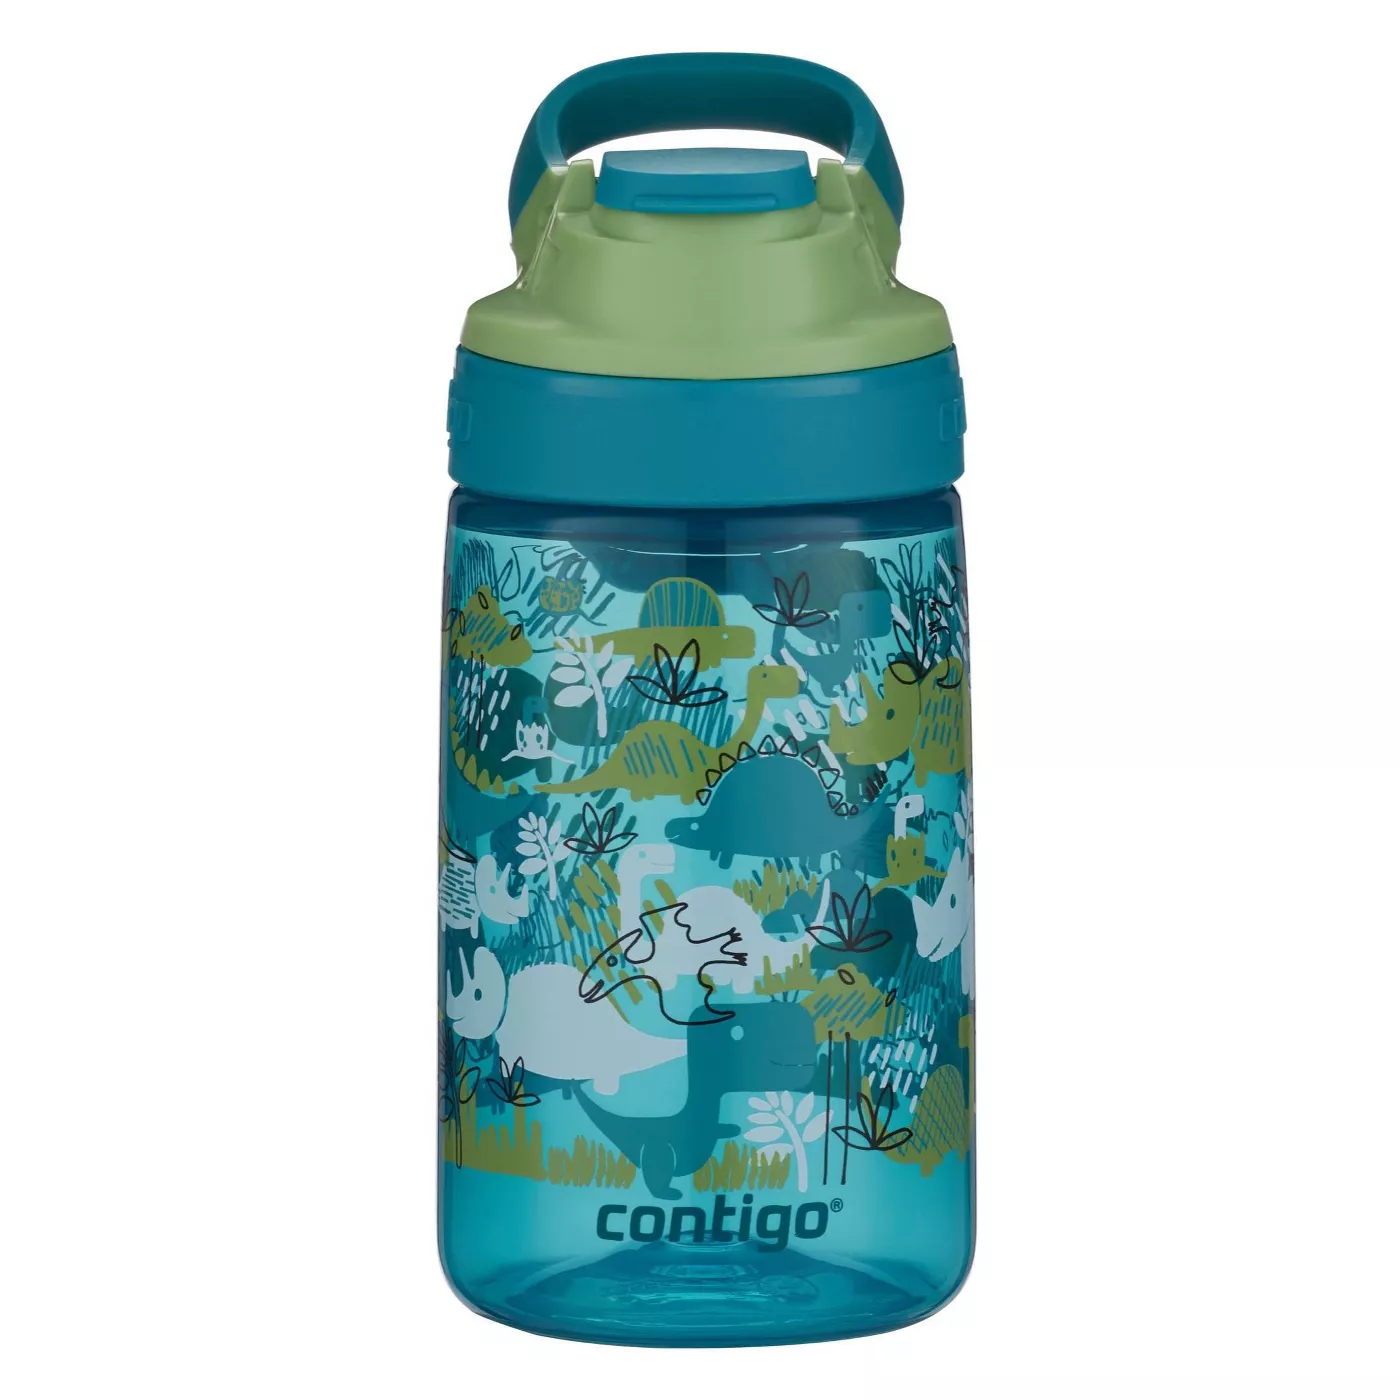 Contigo 14oz Plastic Kids Autoseal Gizmo Water Bottle - image 1 of 5